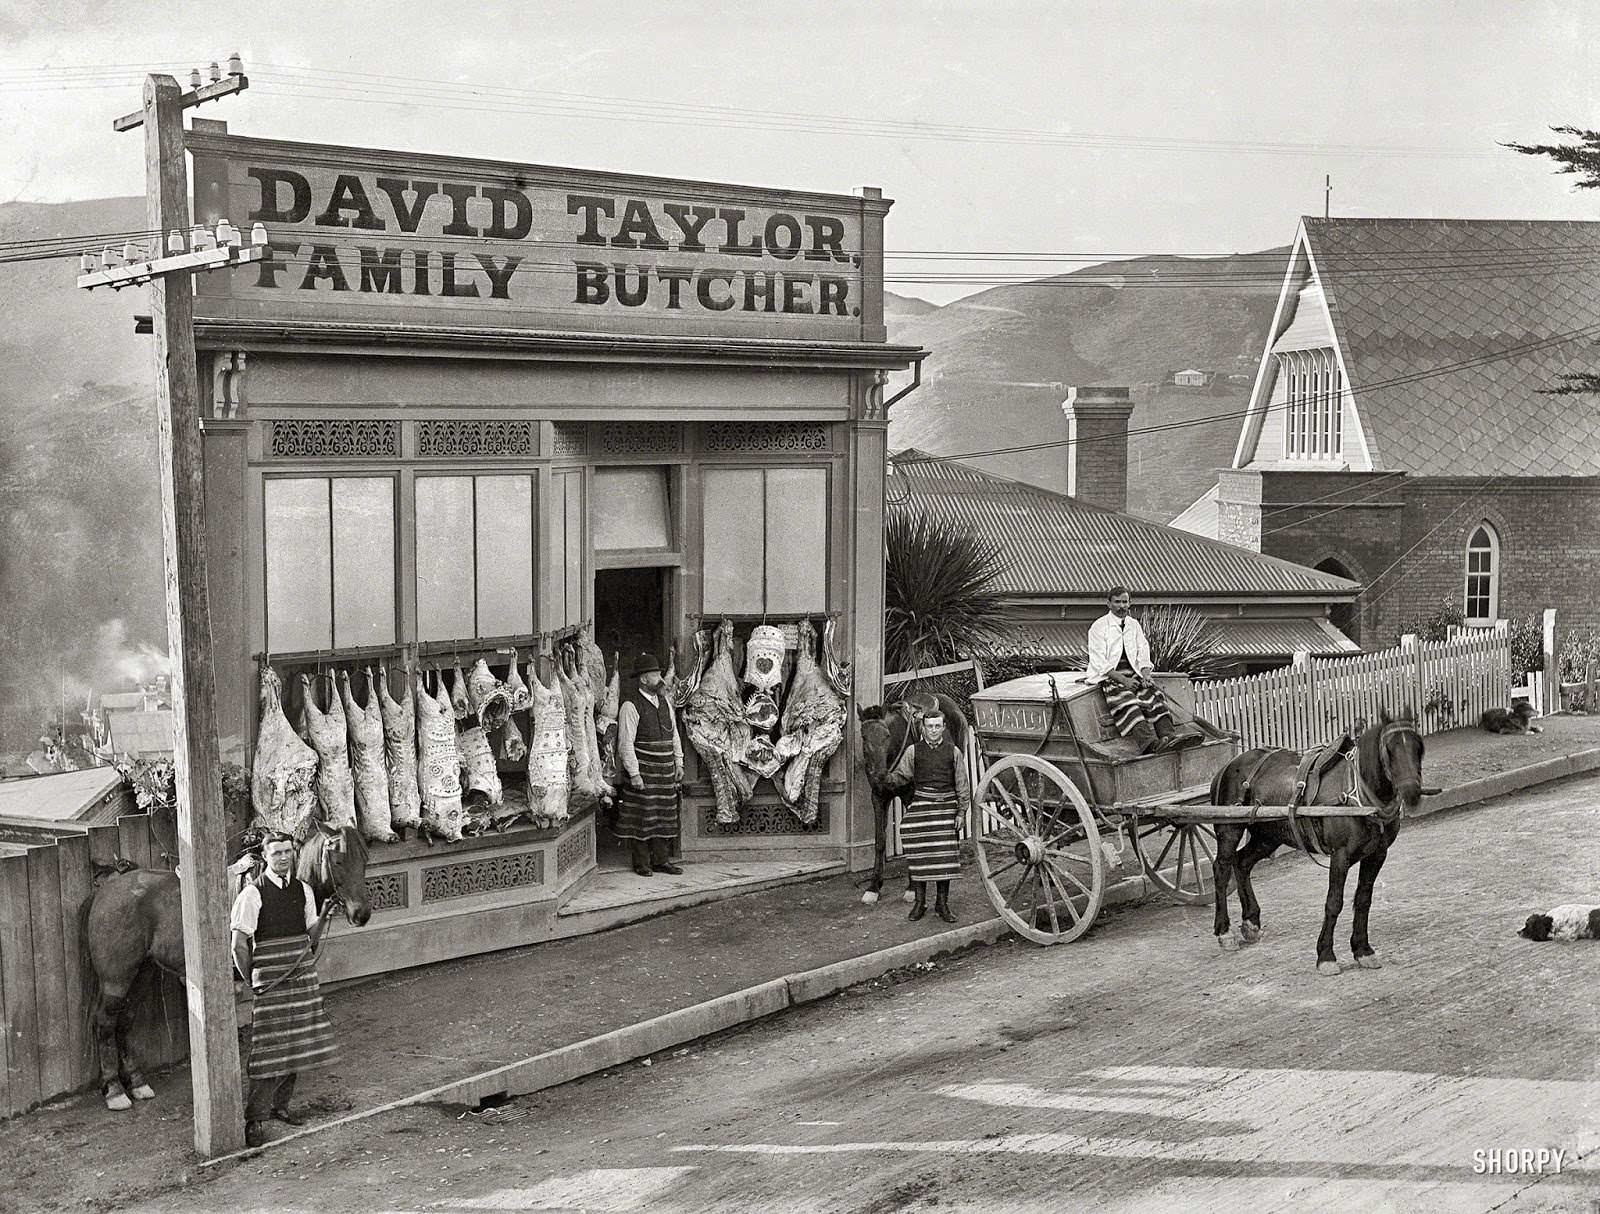 A butcher shop in Wellington, New Zealand in 1910.